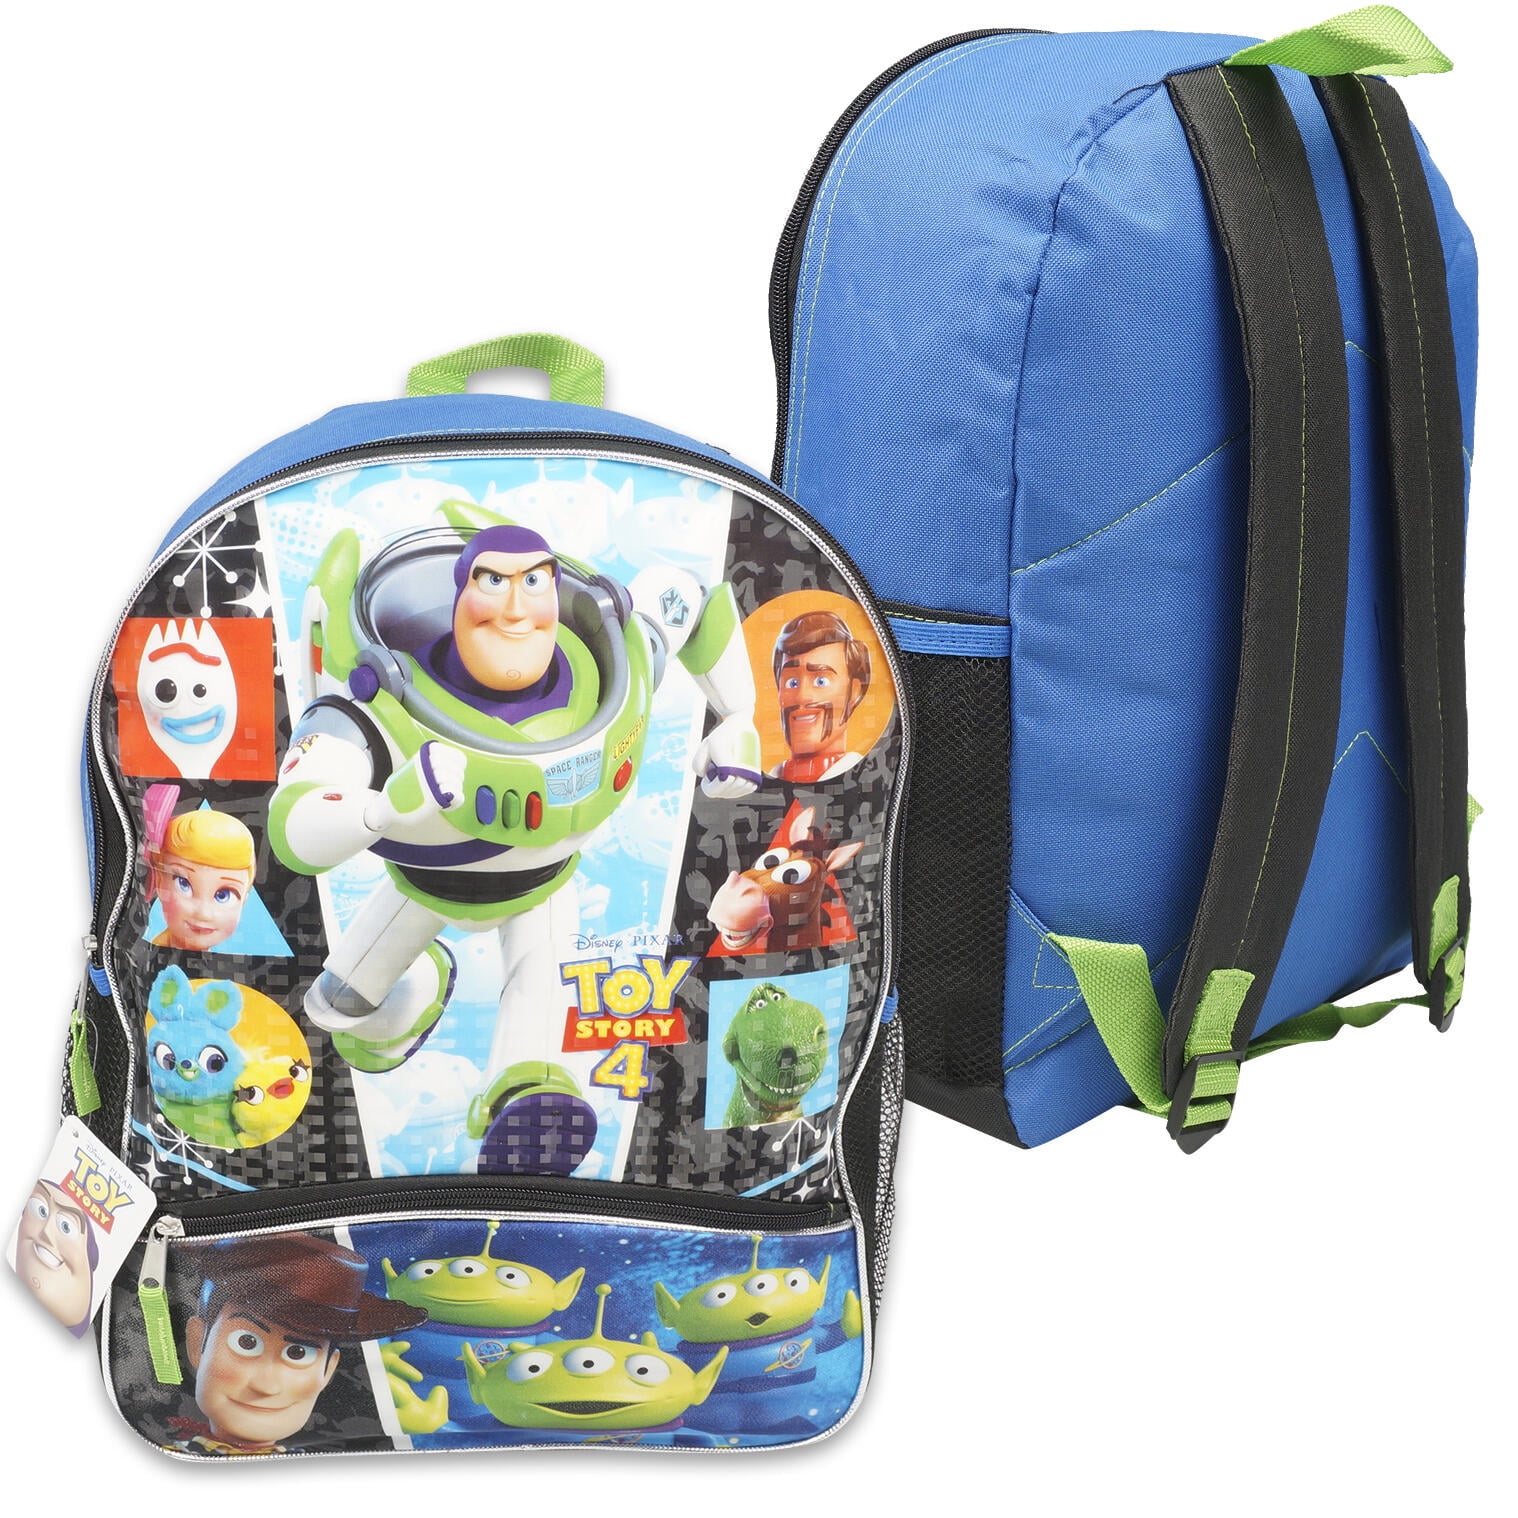 Disney Pixar Toy Story 4 12" Canvas Blue & Green School Backpack 19395 